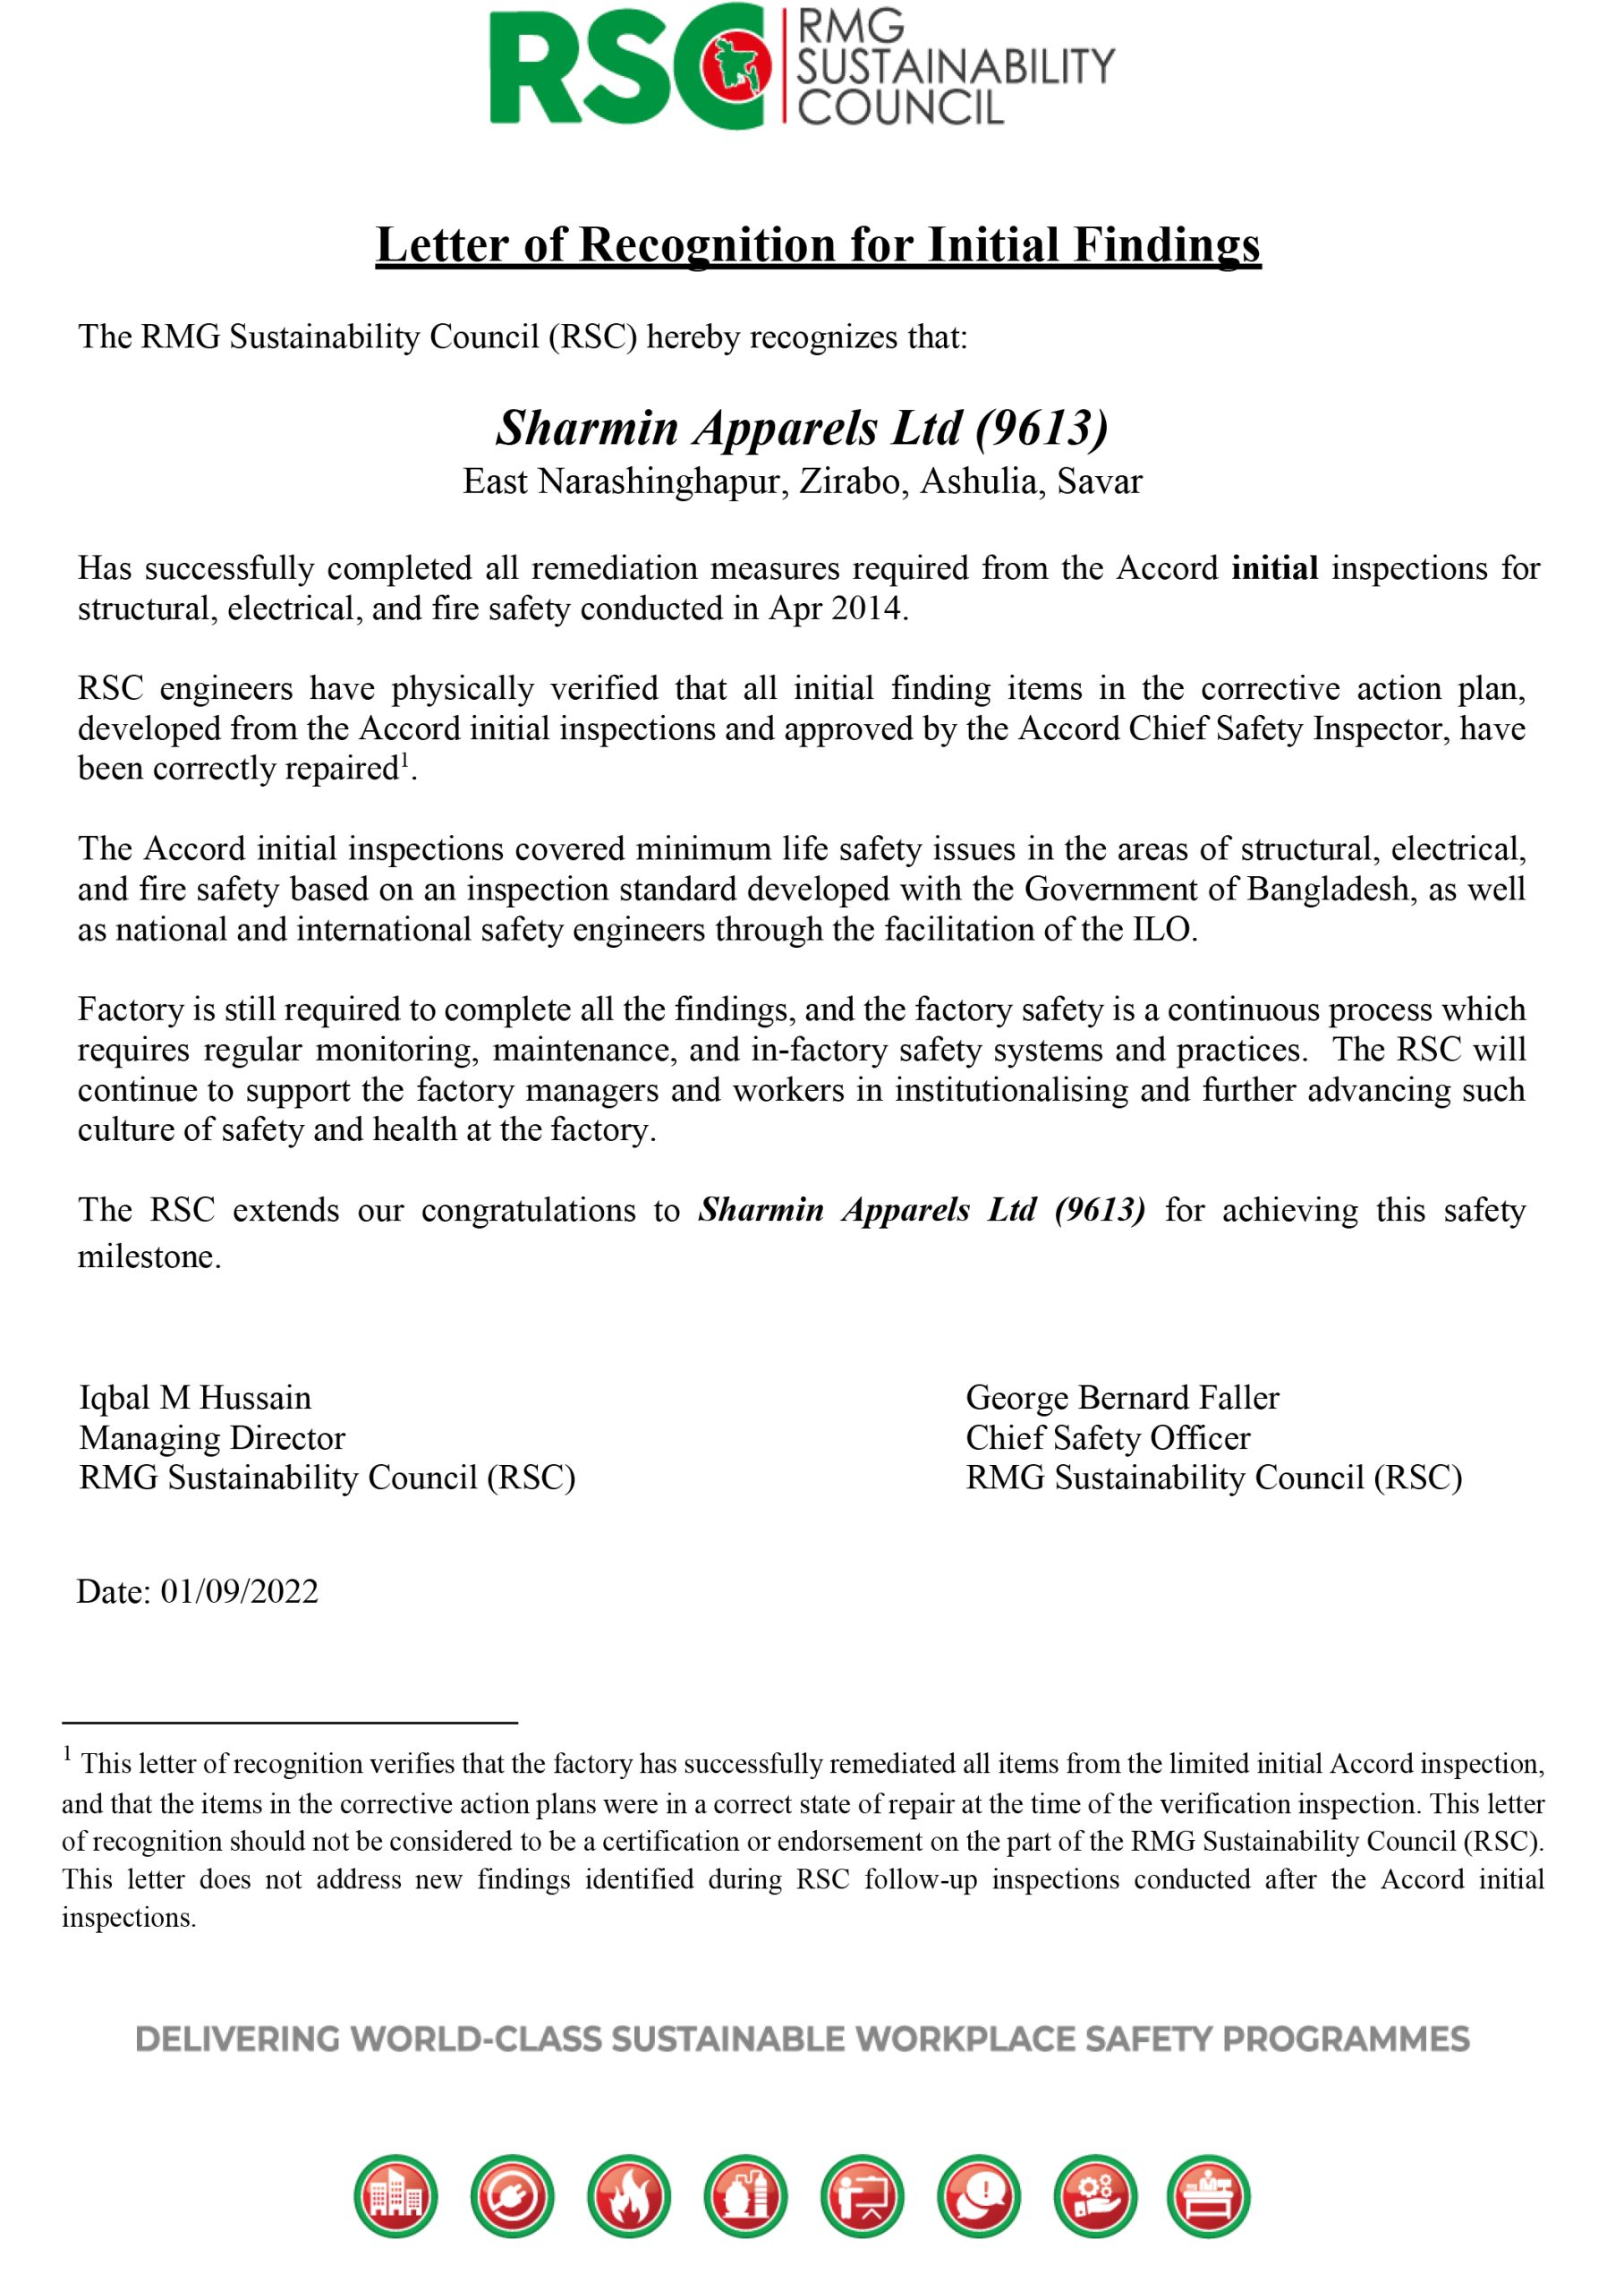 Recognition Letter_9613_Sharmin Apparels Ltd copy